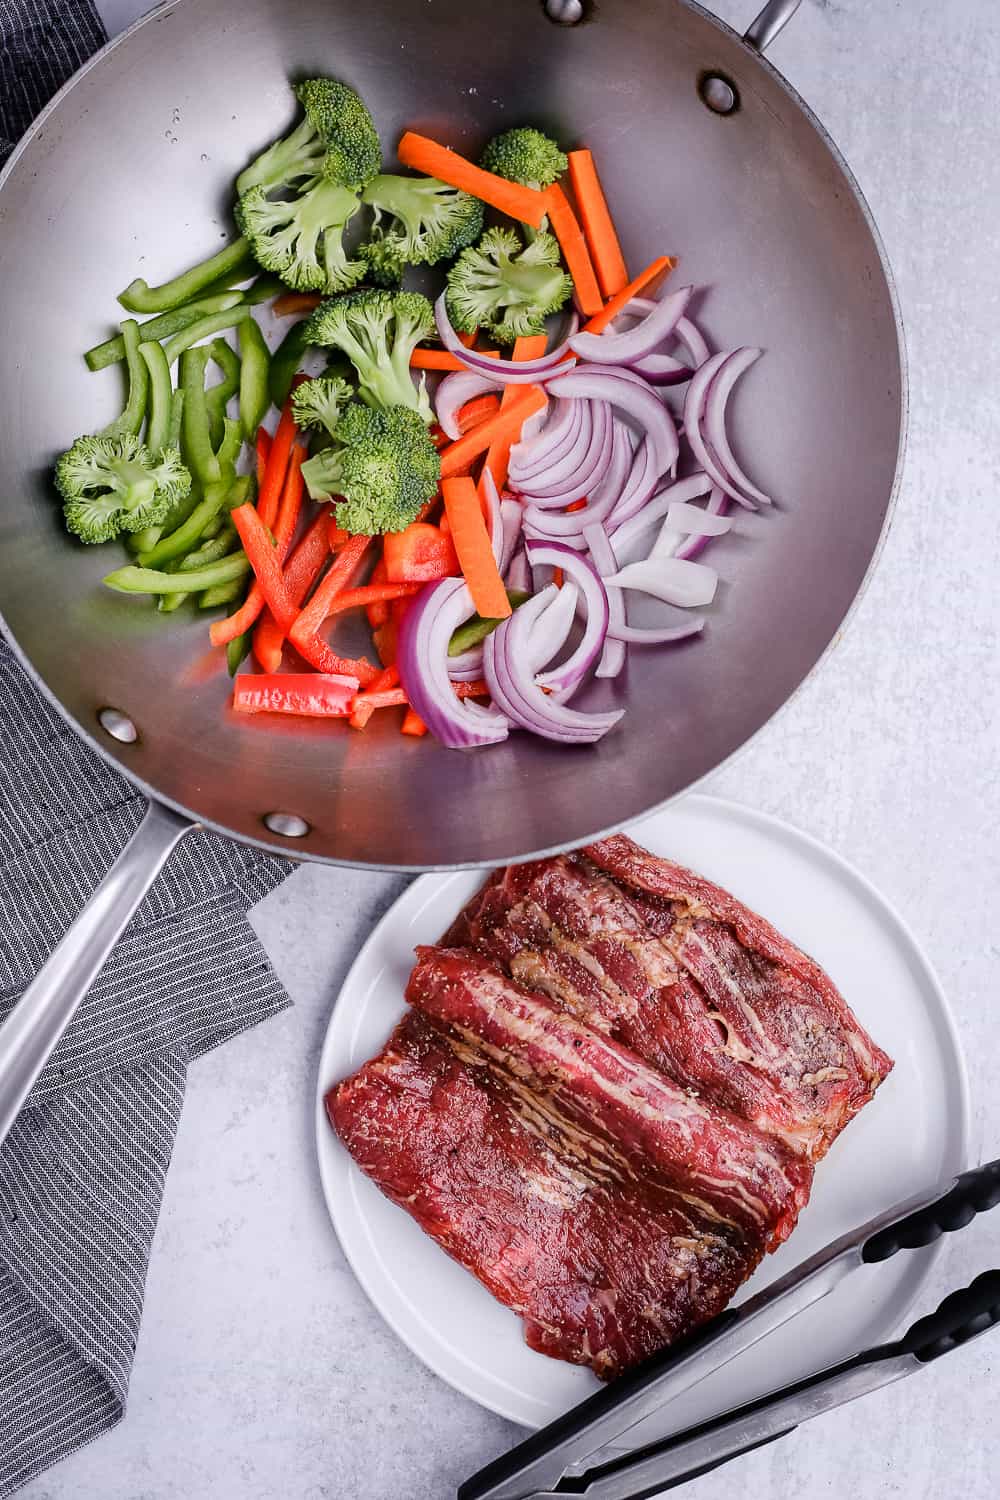 Easy beef stir fry recipe with skirt steak and veggies